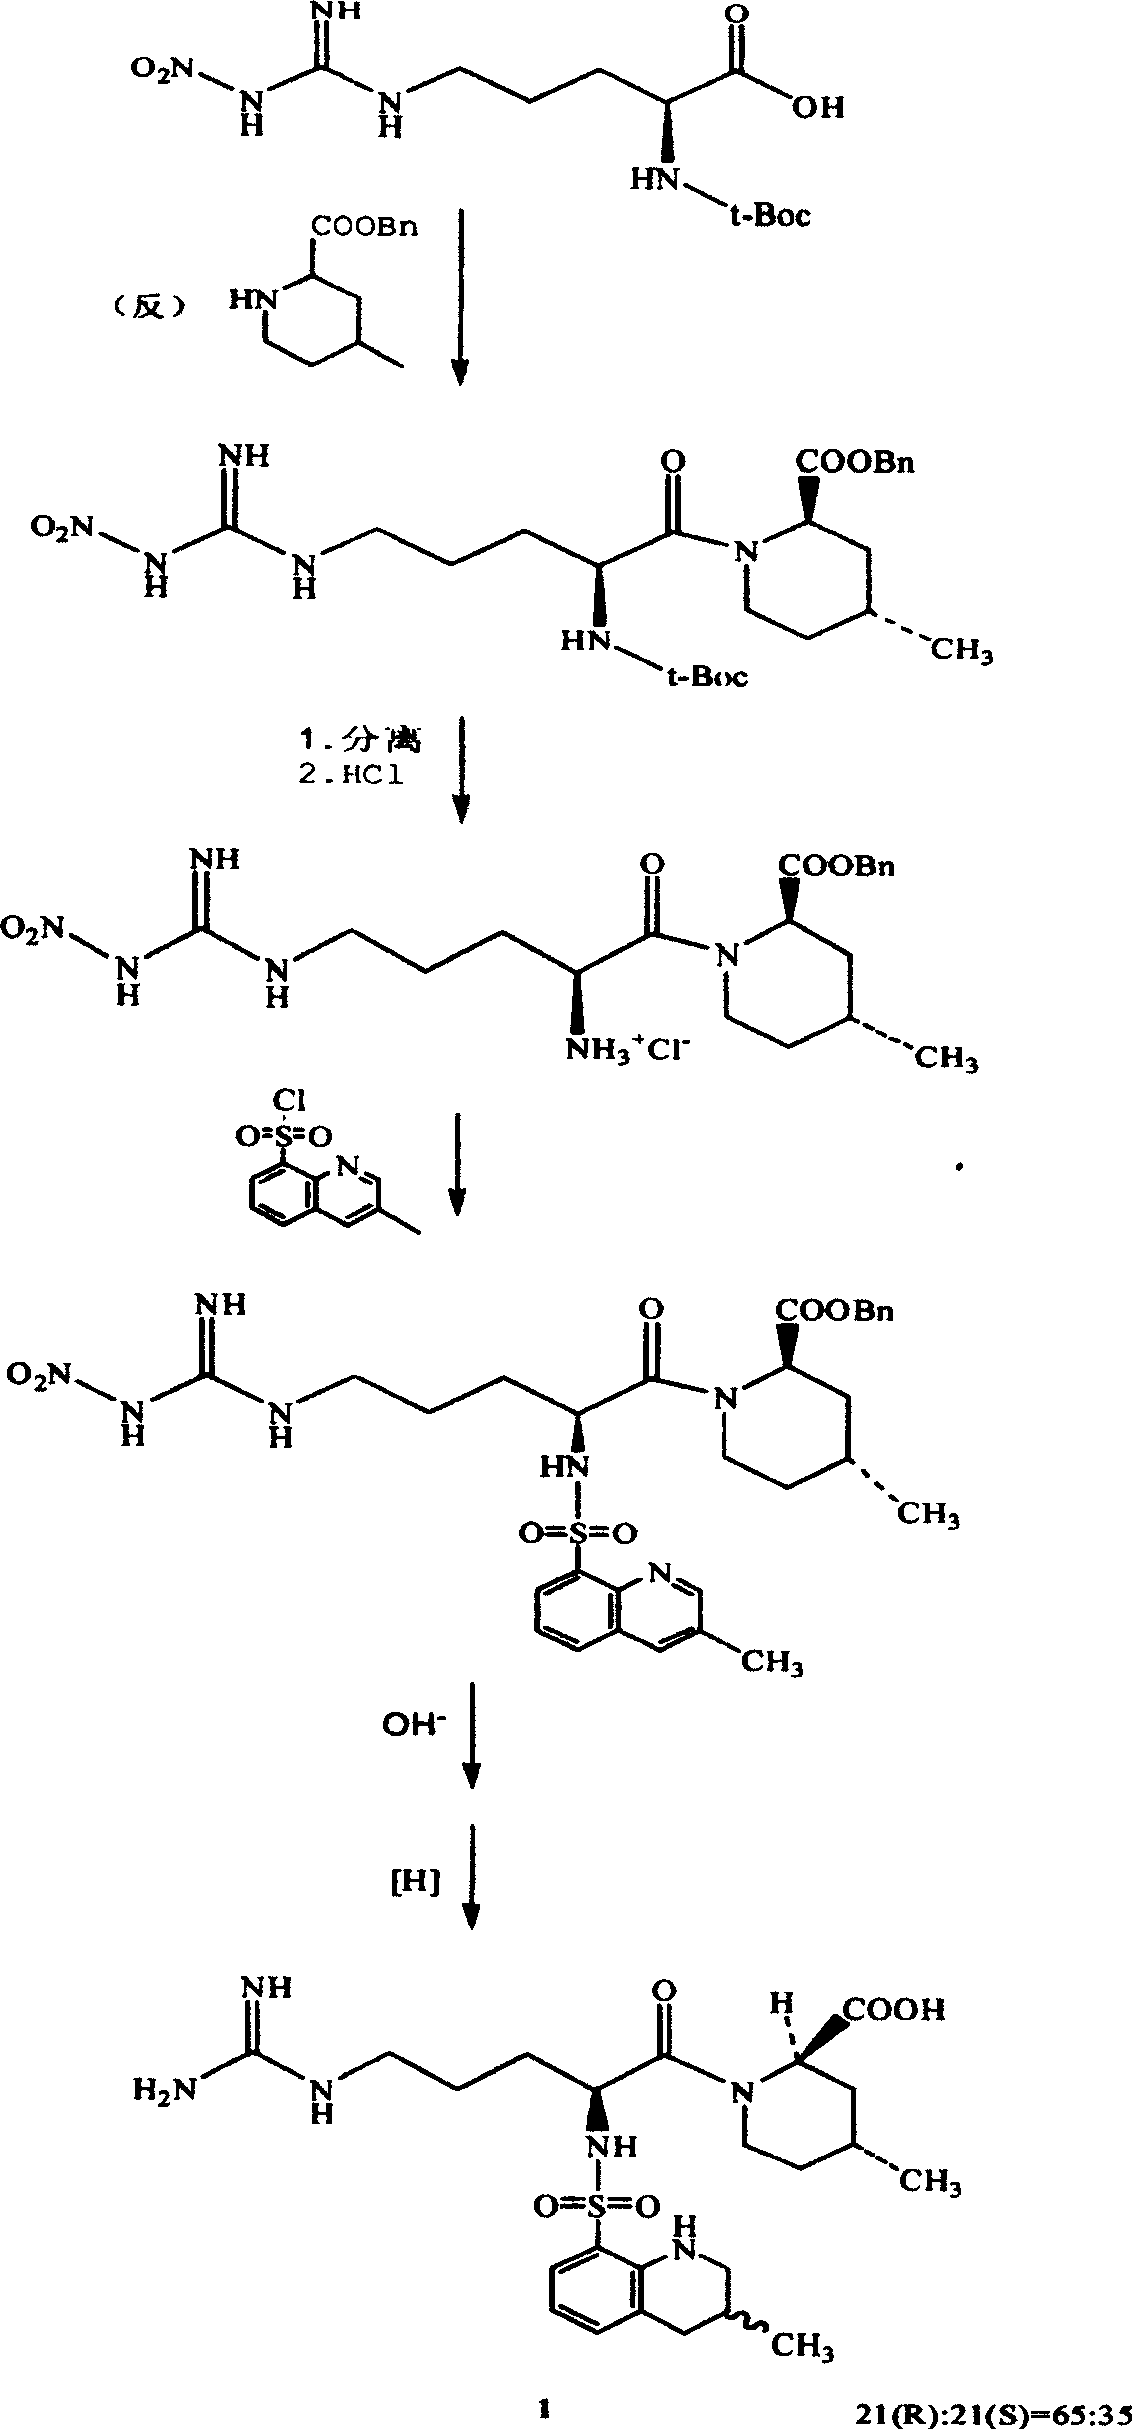 A preparation method of argatroban intermediates